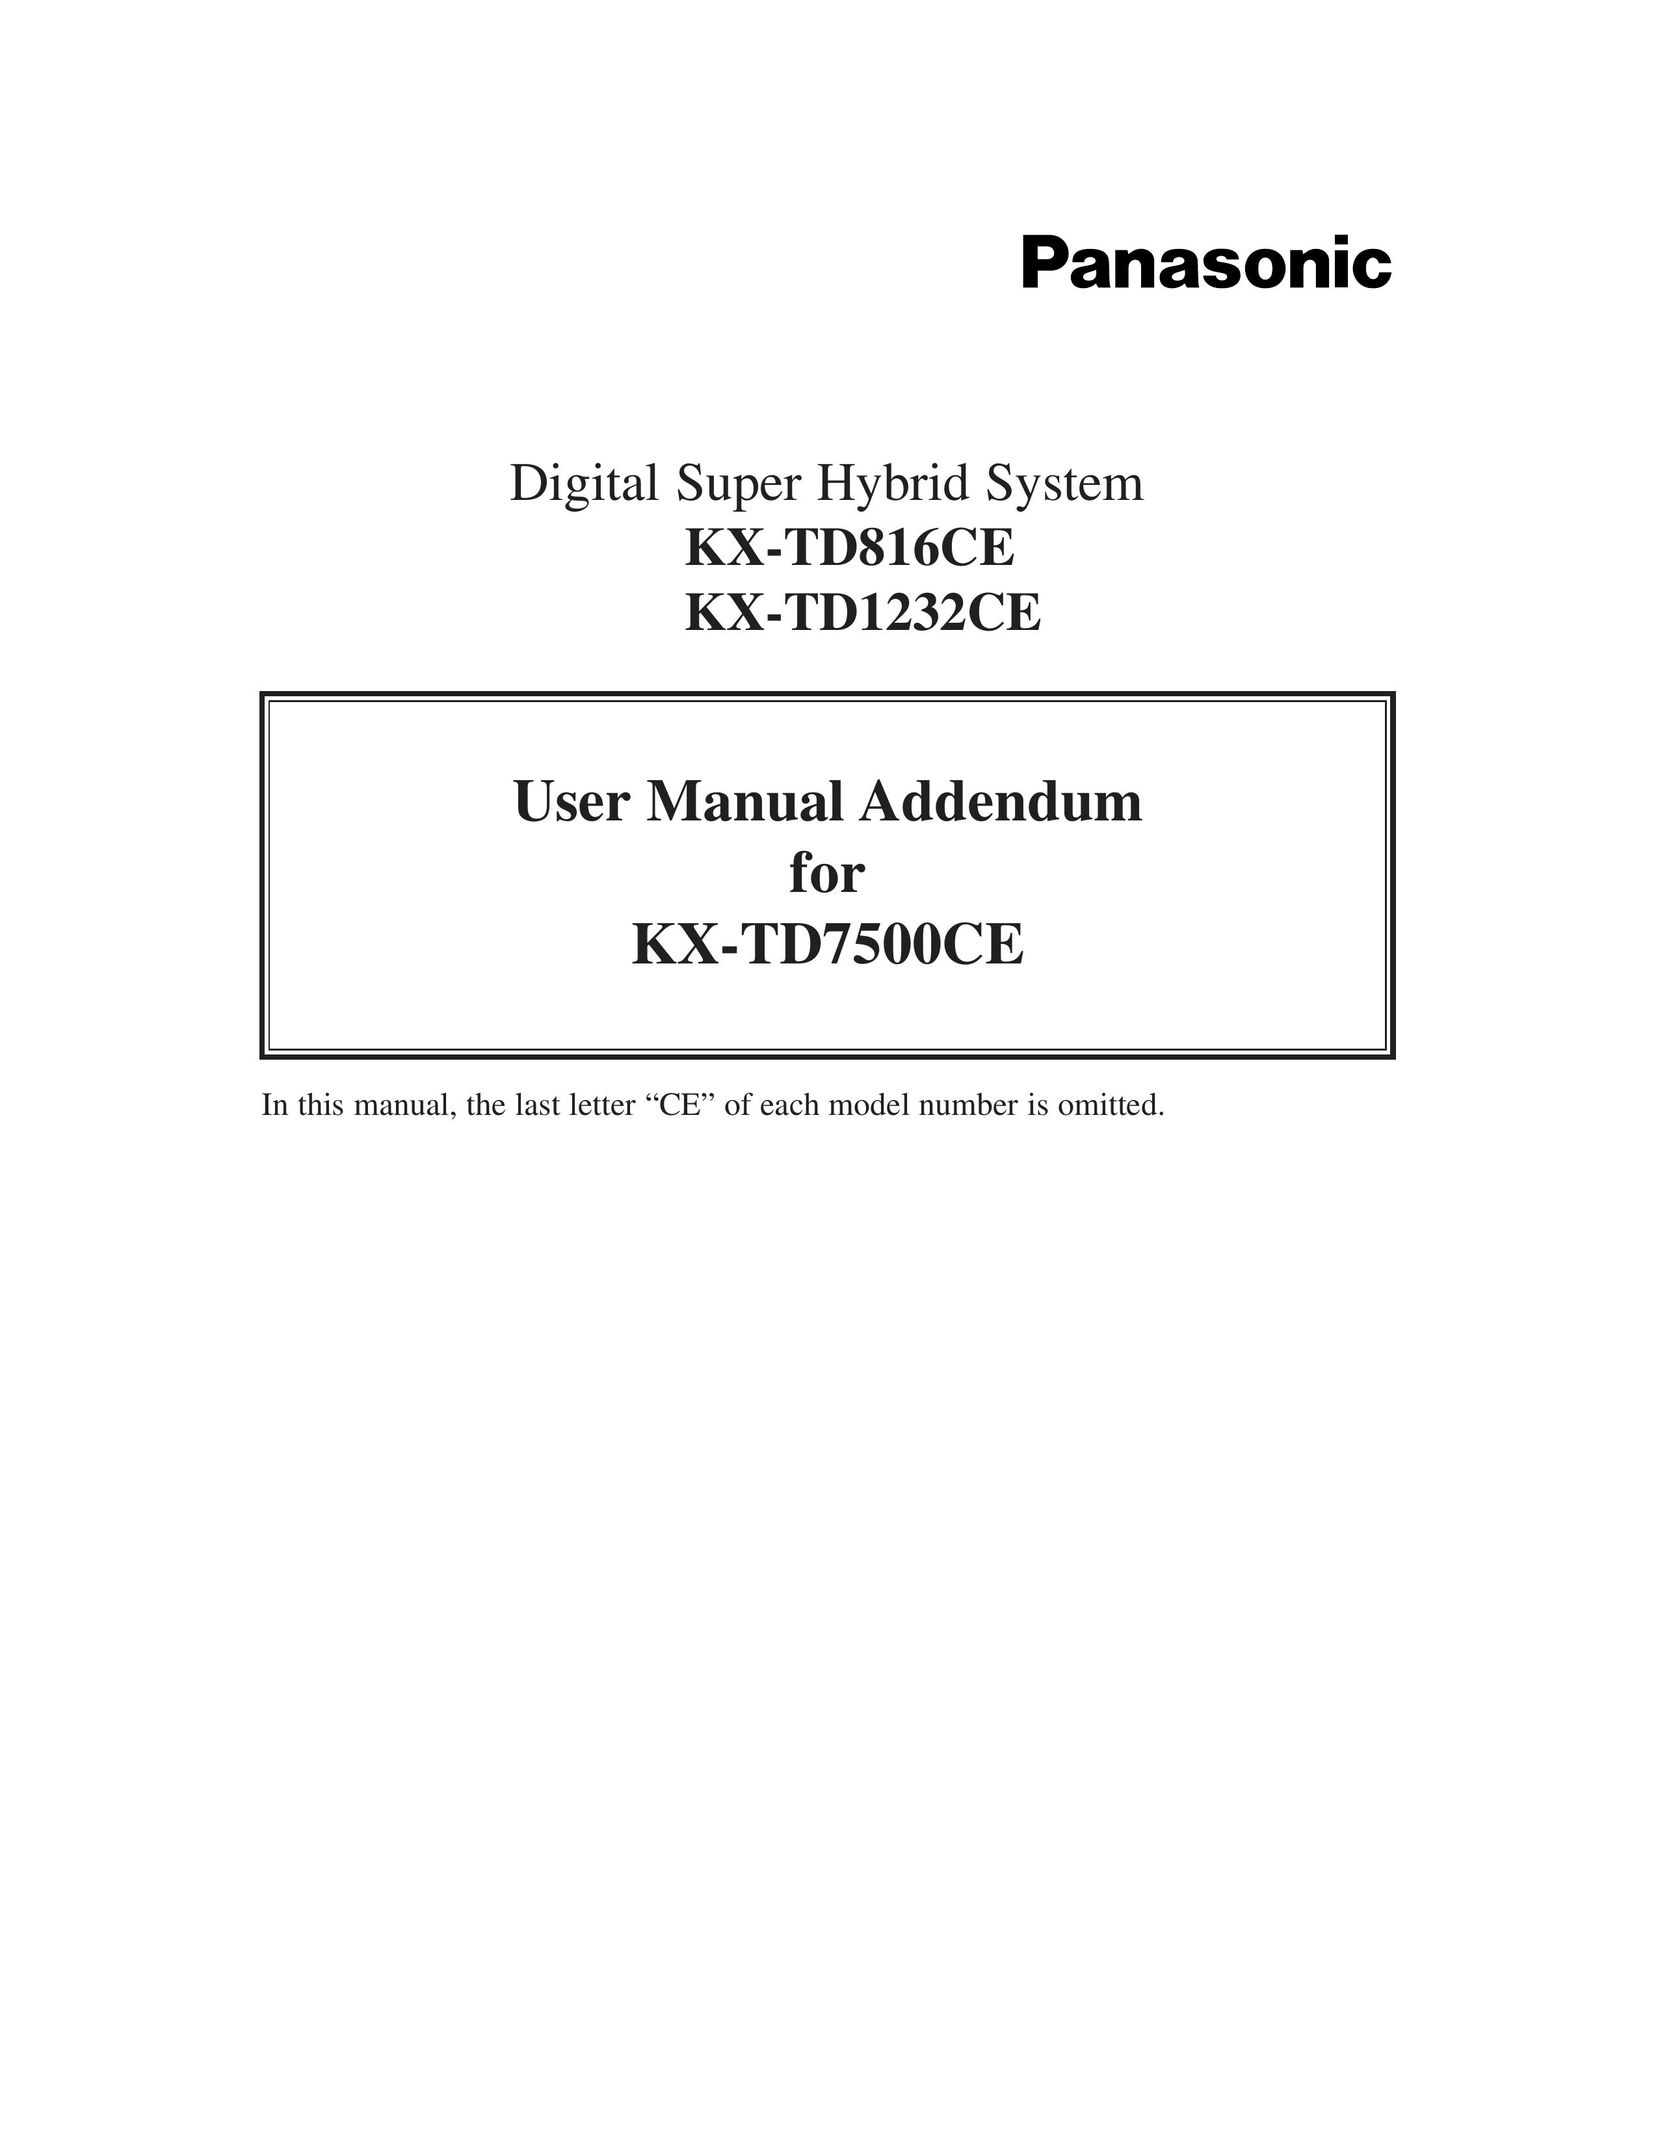 Panasonic KX-TD1232CE Headphones User Manual